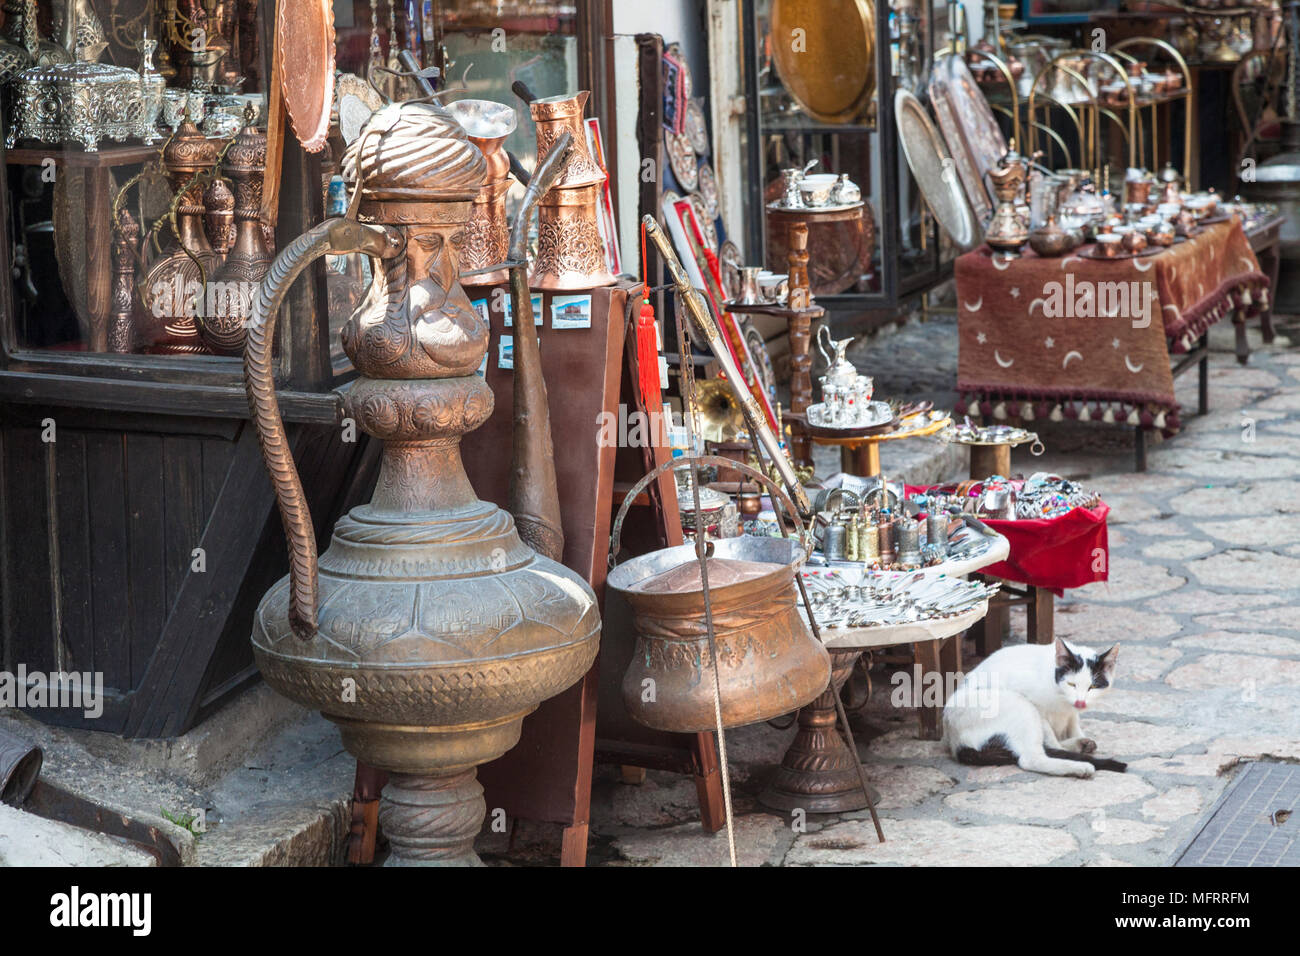 A tourist souvenir shop selling copper wares in Sarajevo, Bosnia and Herzegovina Stock Photo